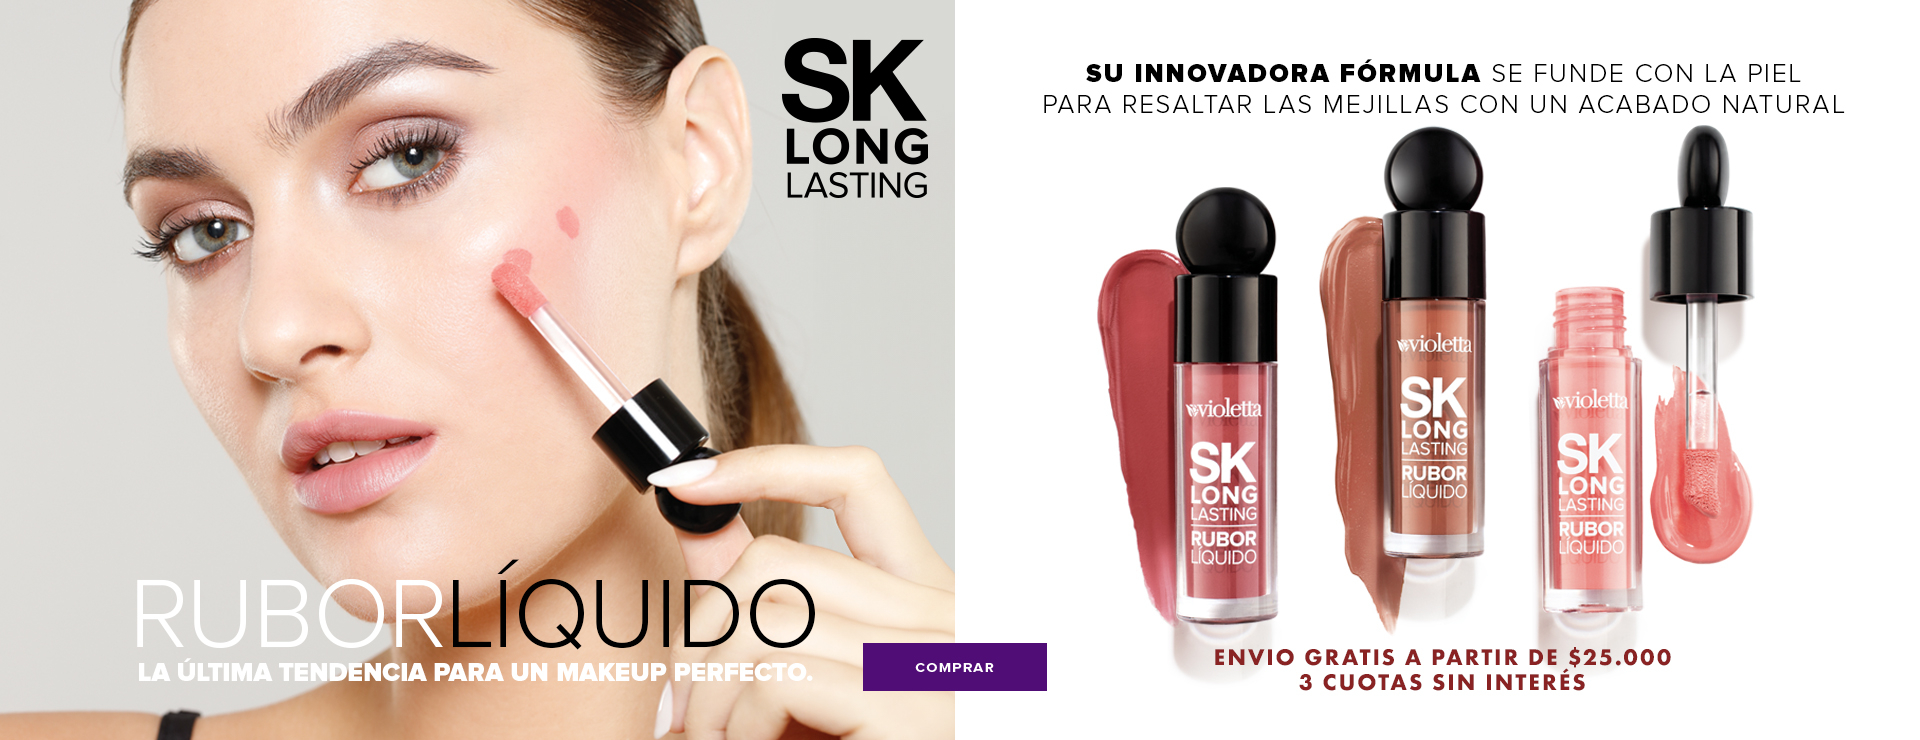 https://www.violettacosmeticos.com/rubor-liquido-silk-kiss-long-lasting.html